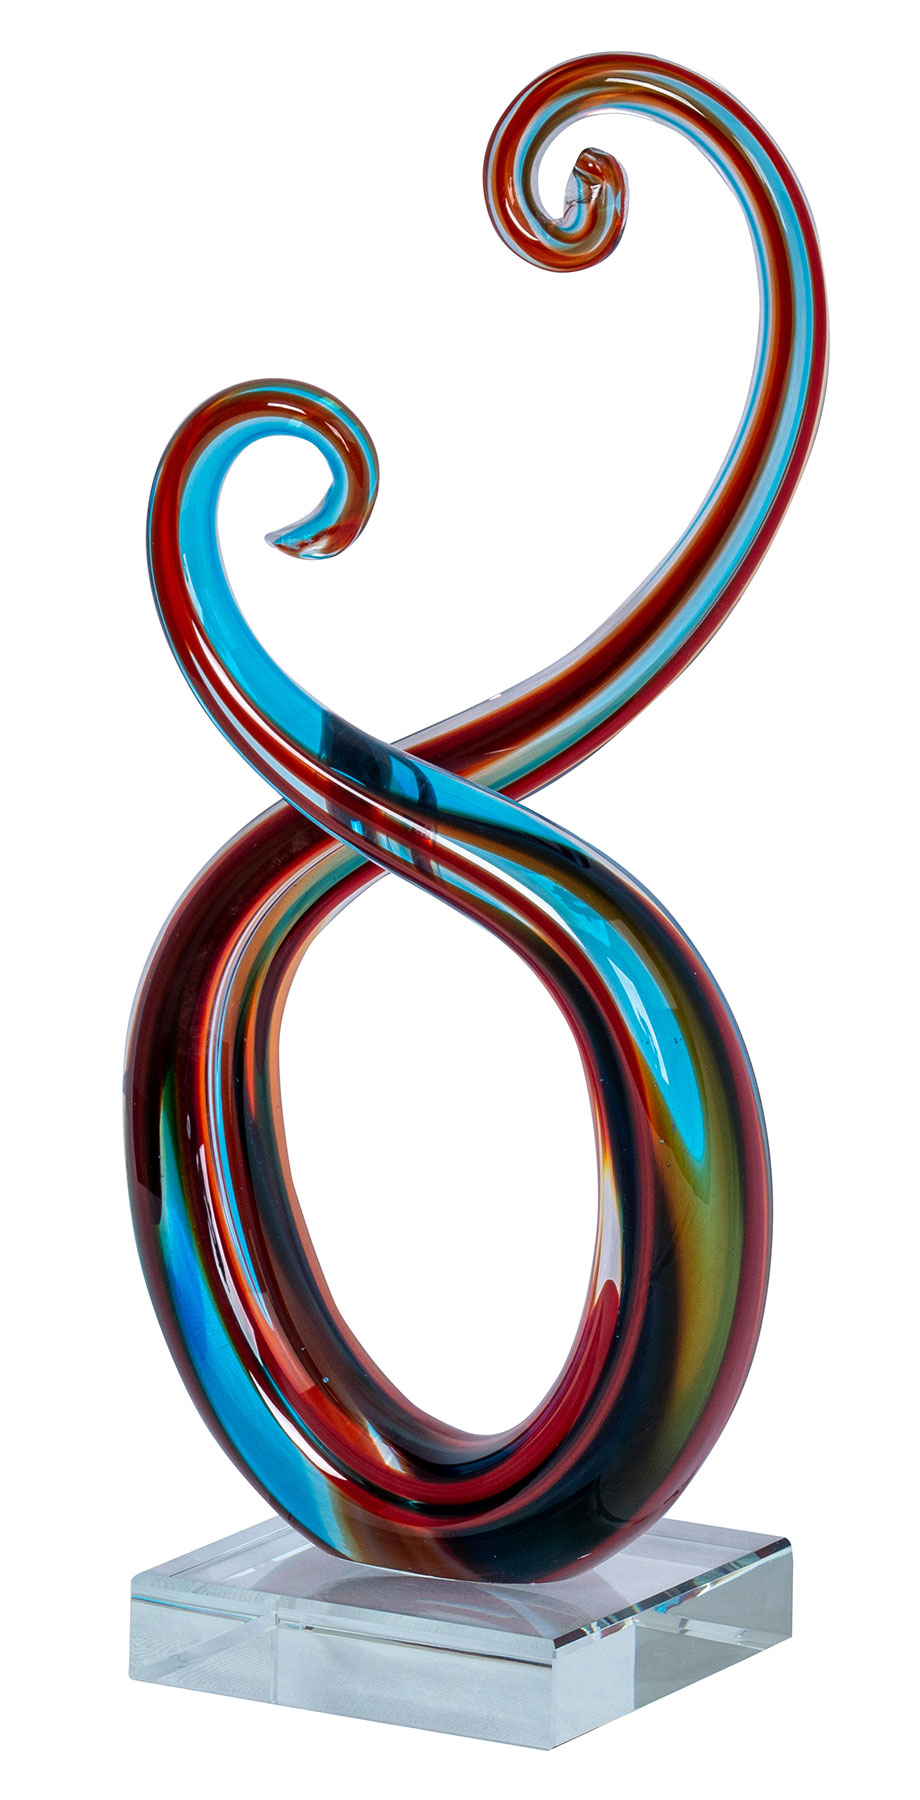 Skulptur H28cm Glas Glasdeko Blau Rot Deko Design Figur Unikat Tischdeko Geschenk